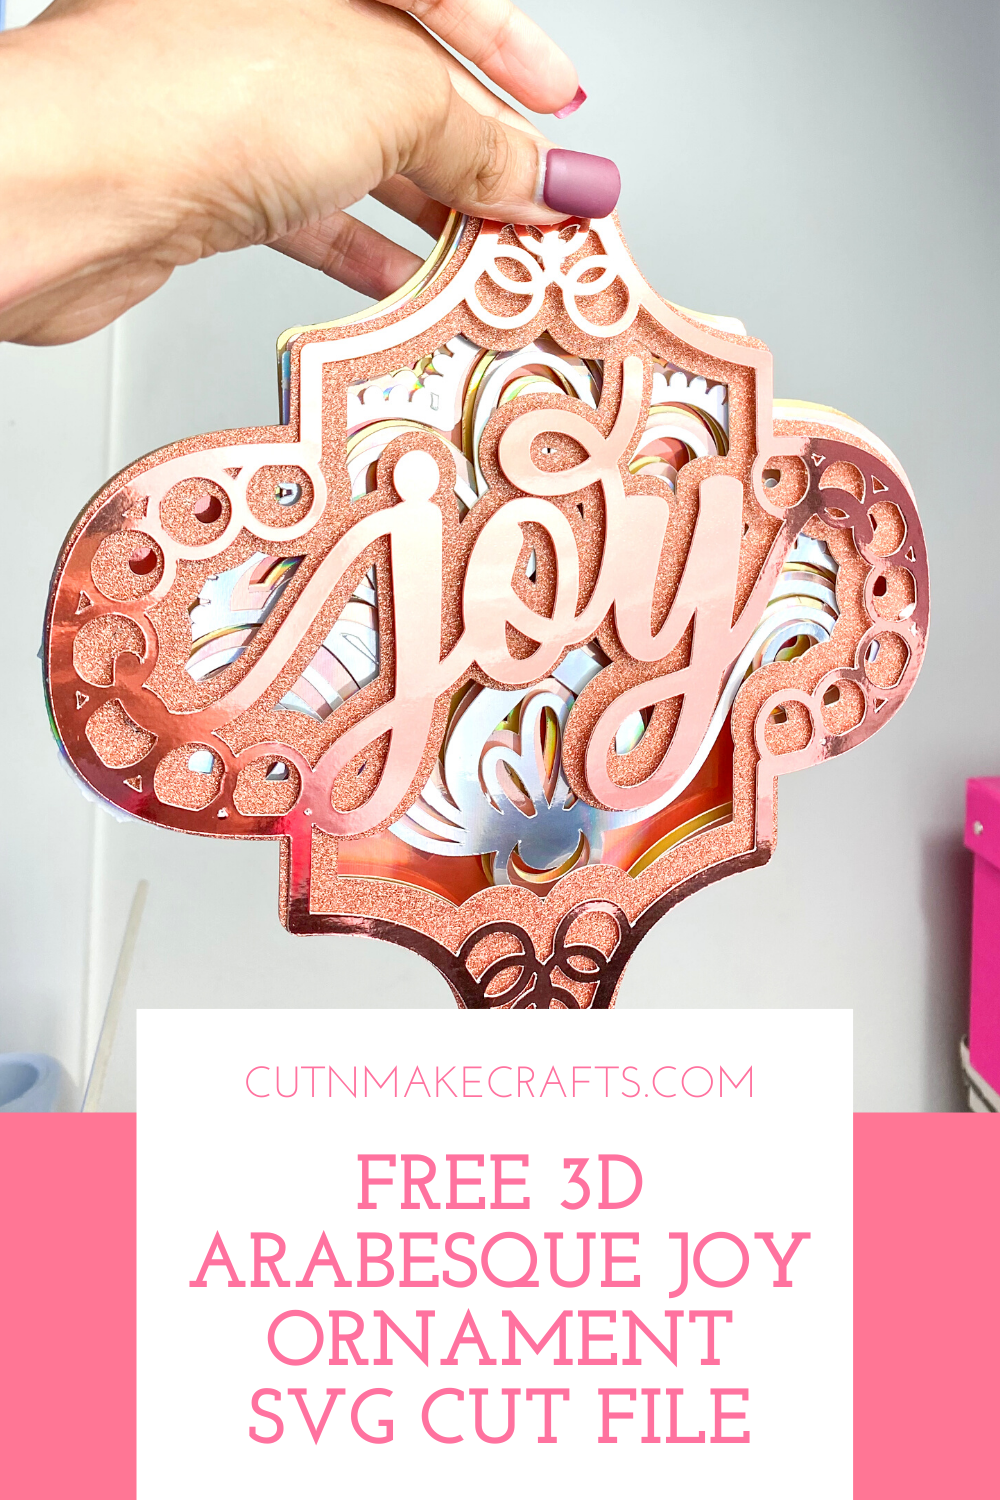 FREE 3D Arabesque Joy Ornament SVG - Cut N Make Crafts